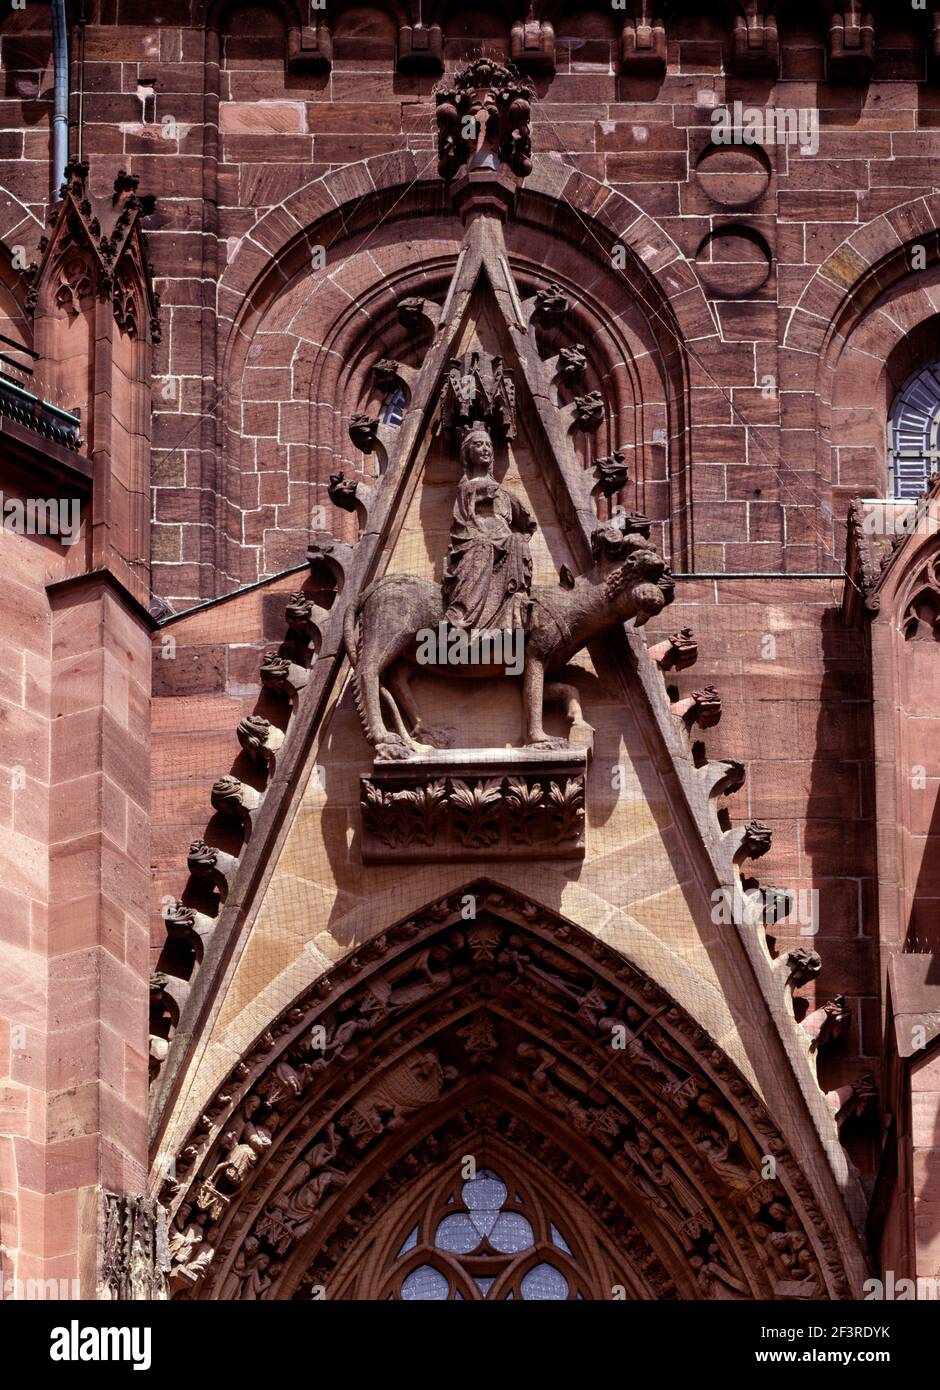 Wimperge am S¸dportal. Marienfigur um 1300., Worms, Dom St. Peter Stock Photo